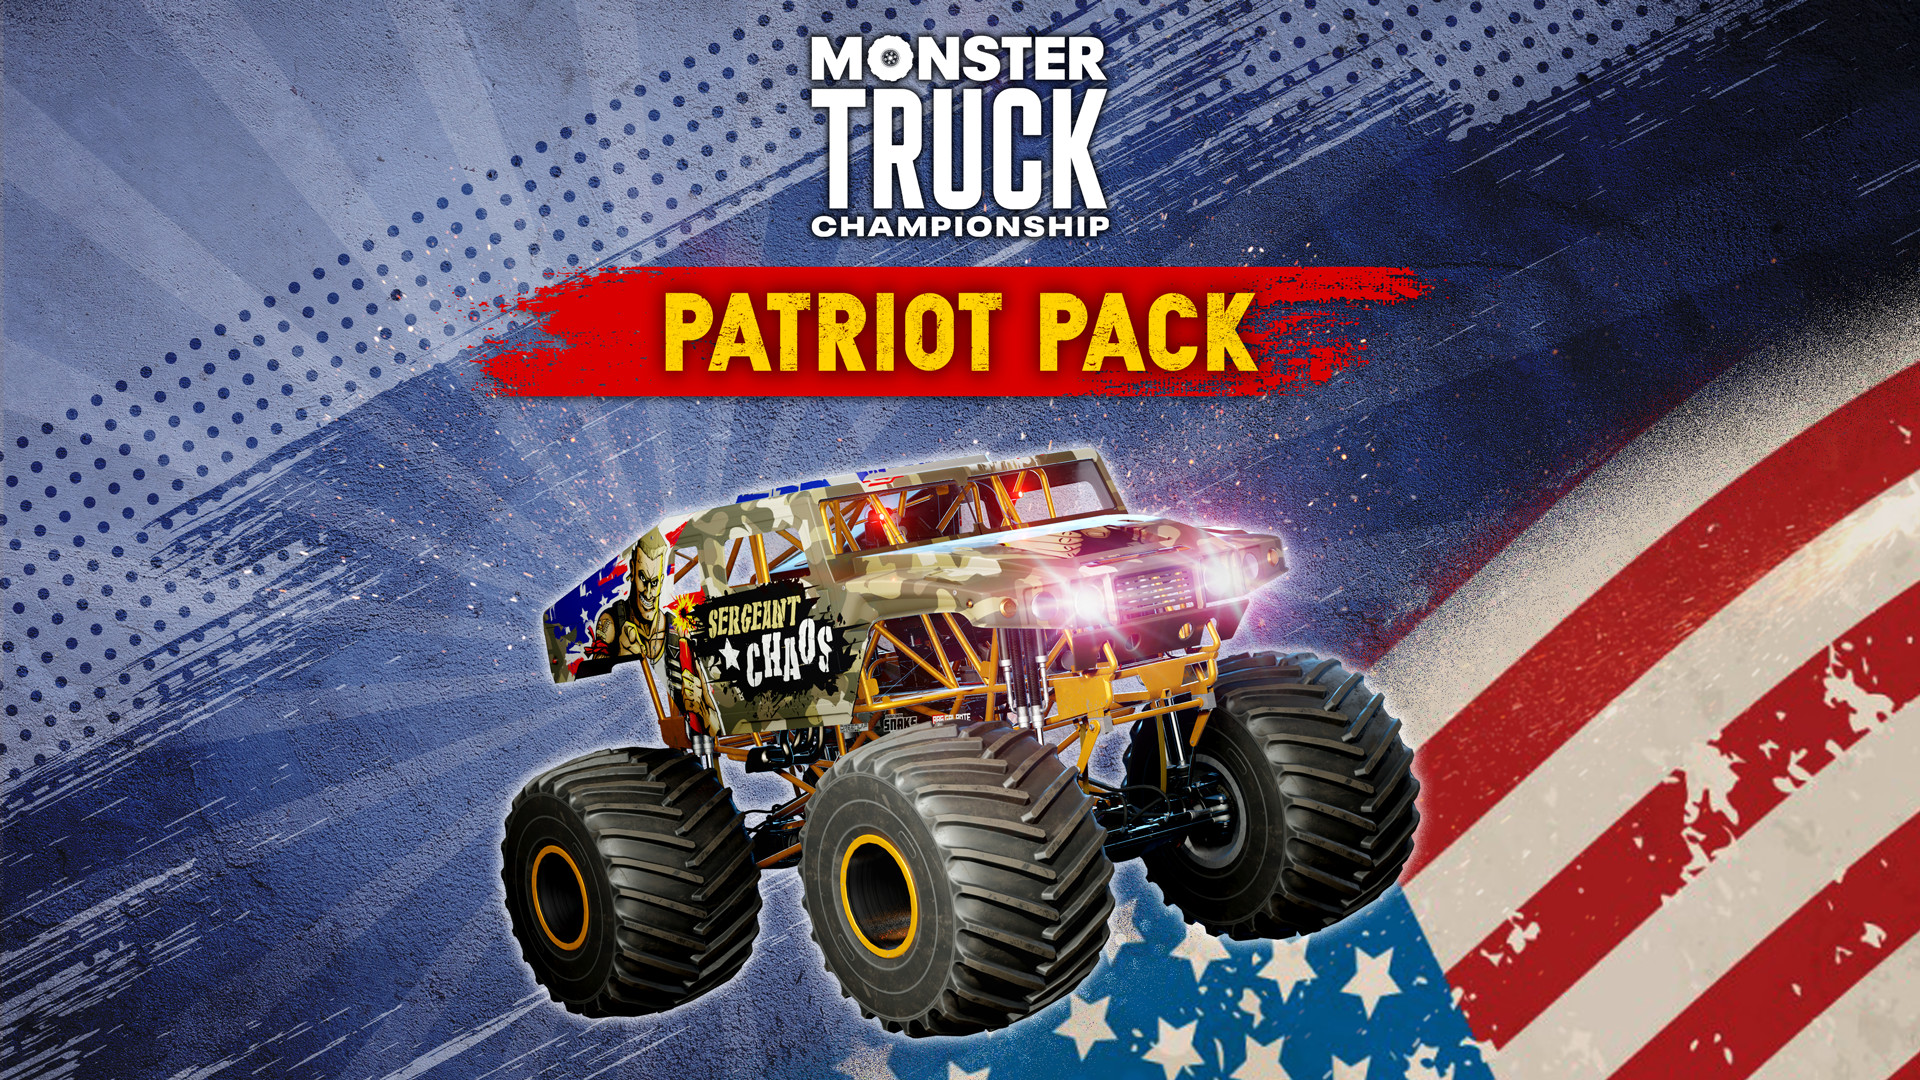 Monster Truck Championship - Patriot Pack DLC Steam CD Key 3.21 $